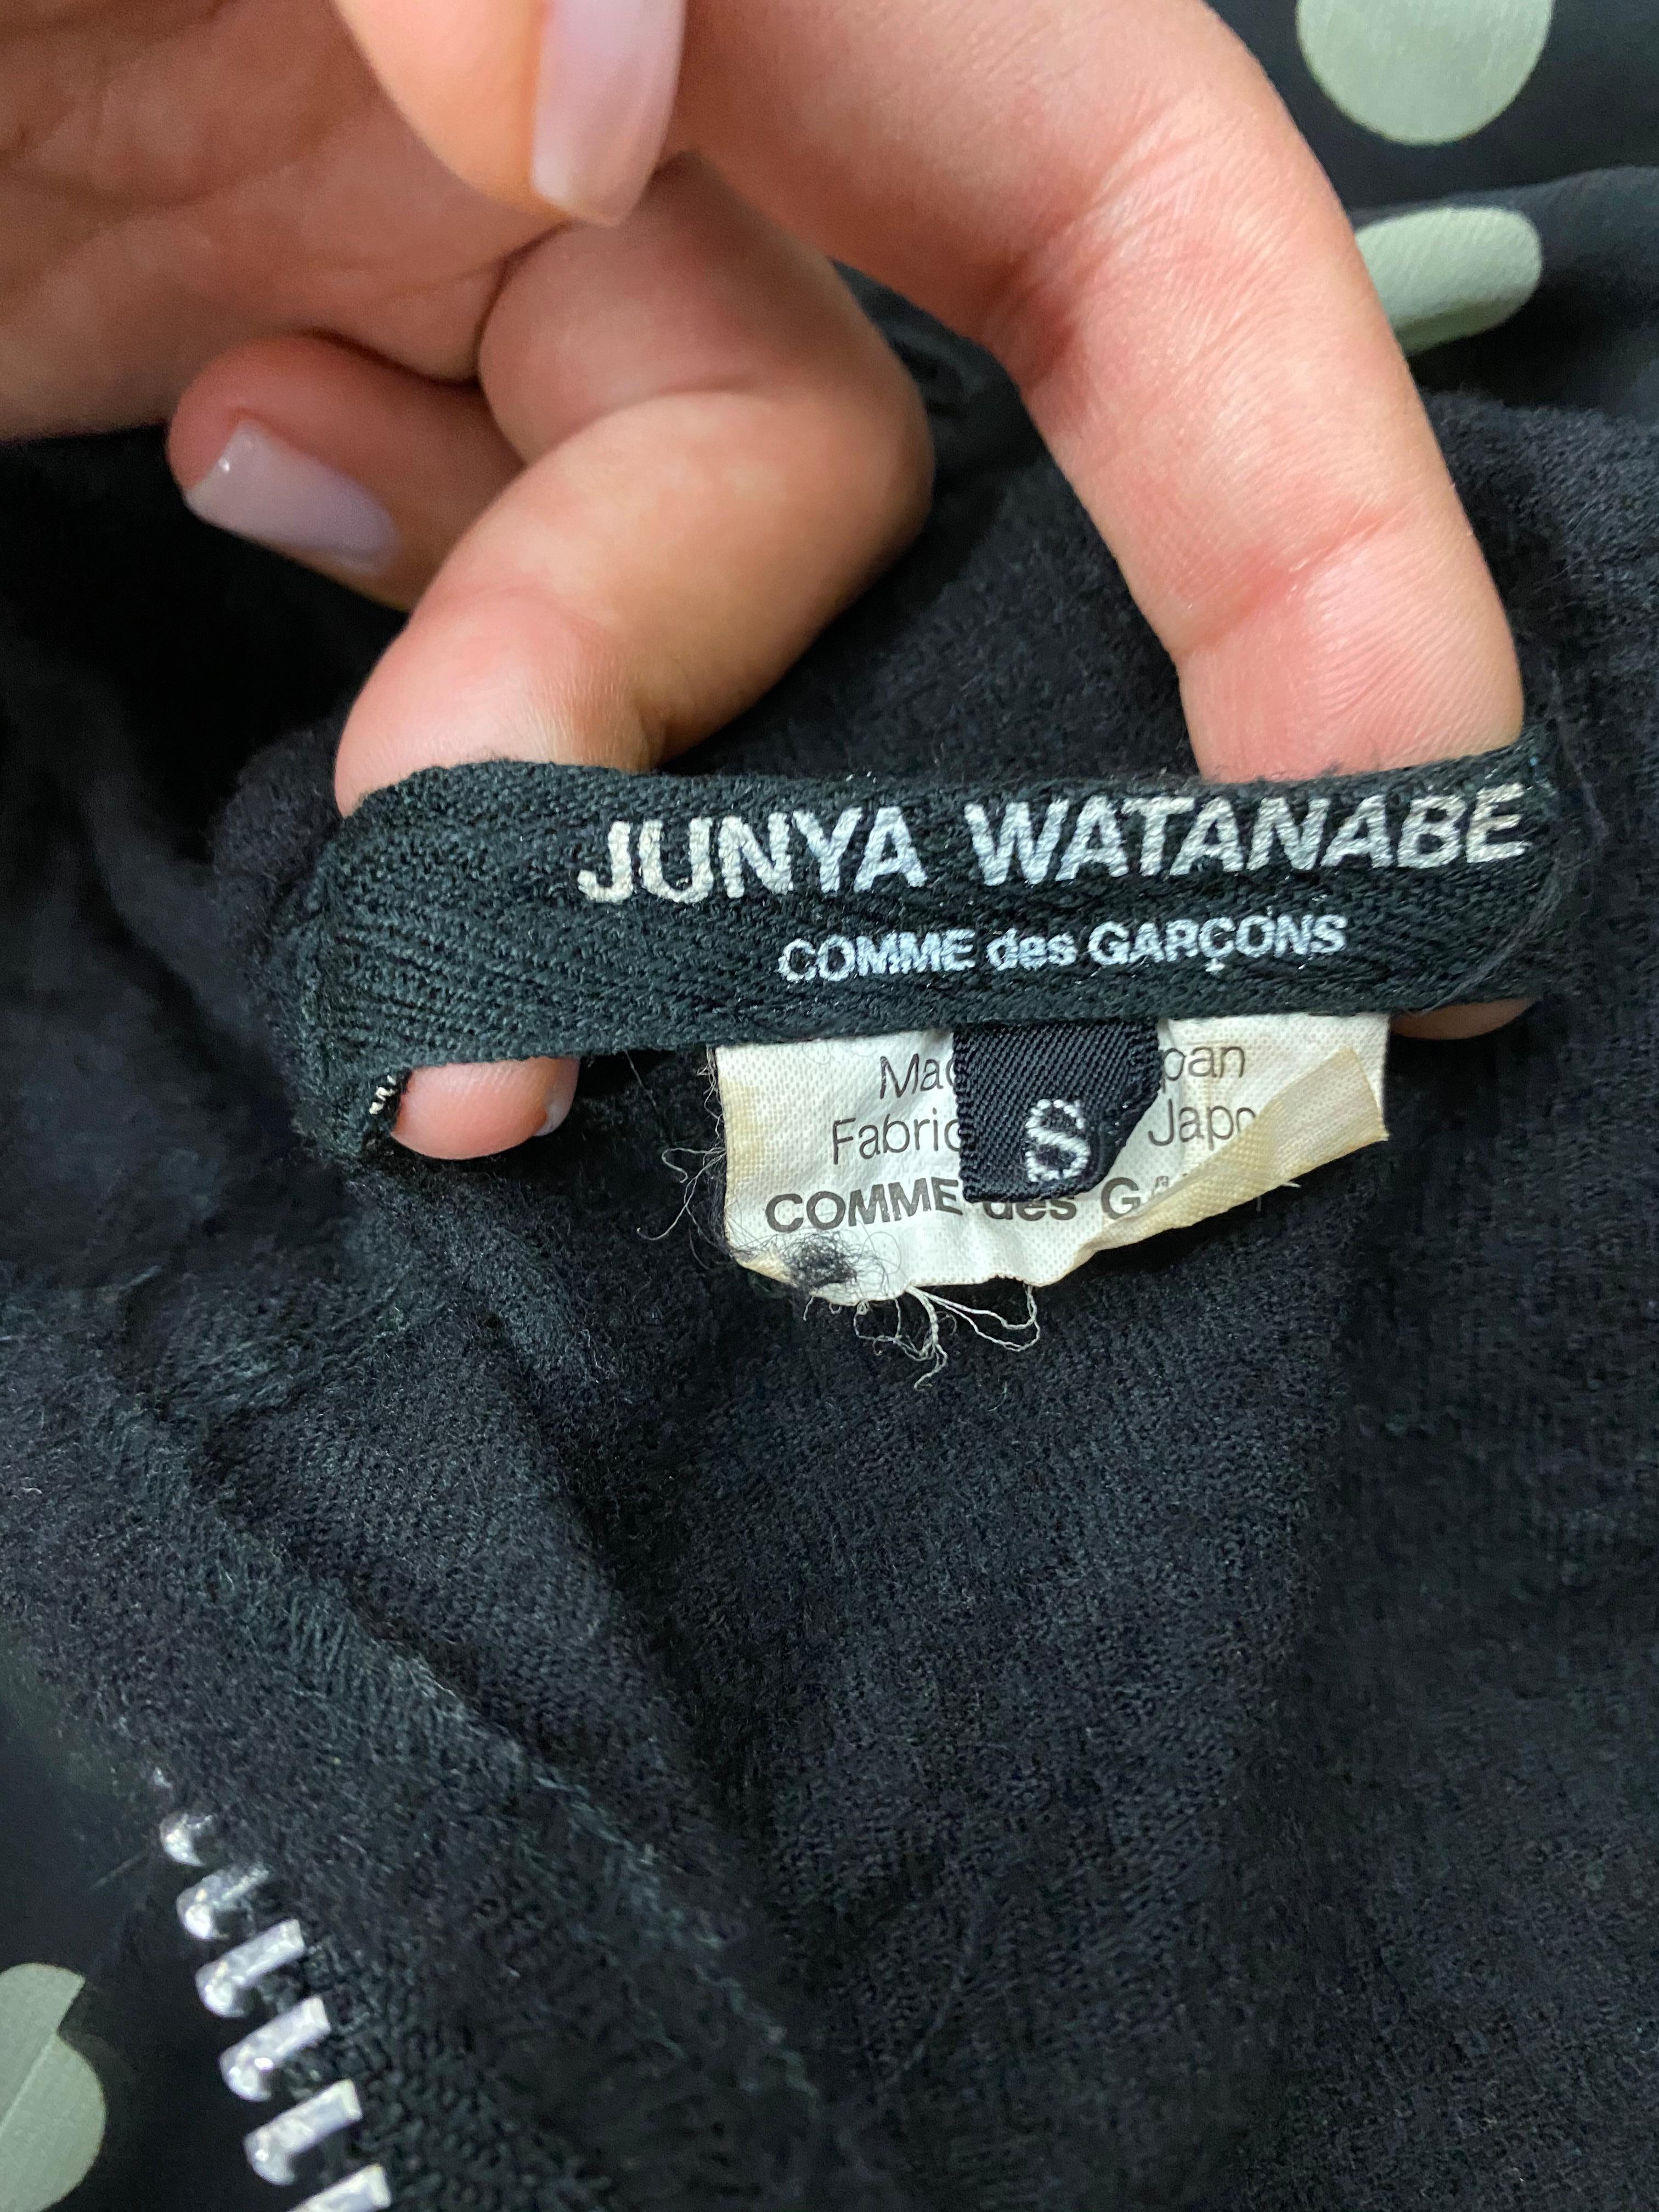 Junya Watanabe Comme des Garcons Black and White Polka Dot Dress Size S 3